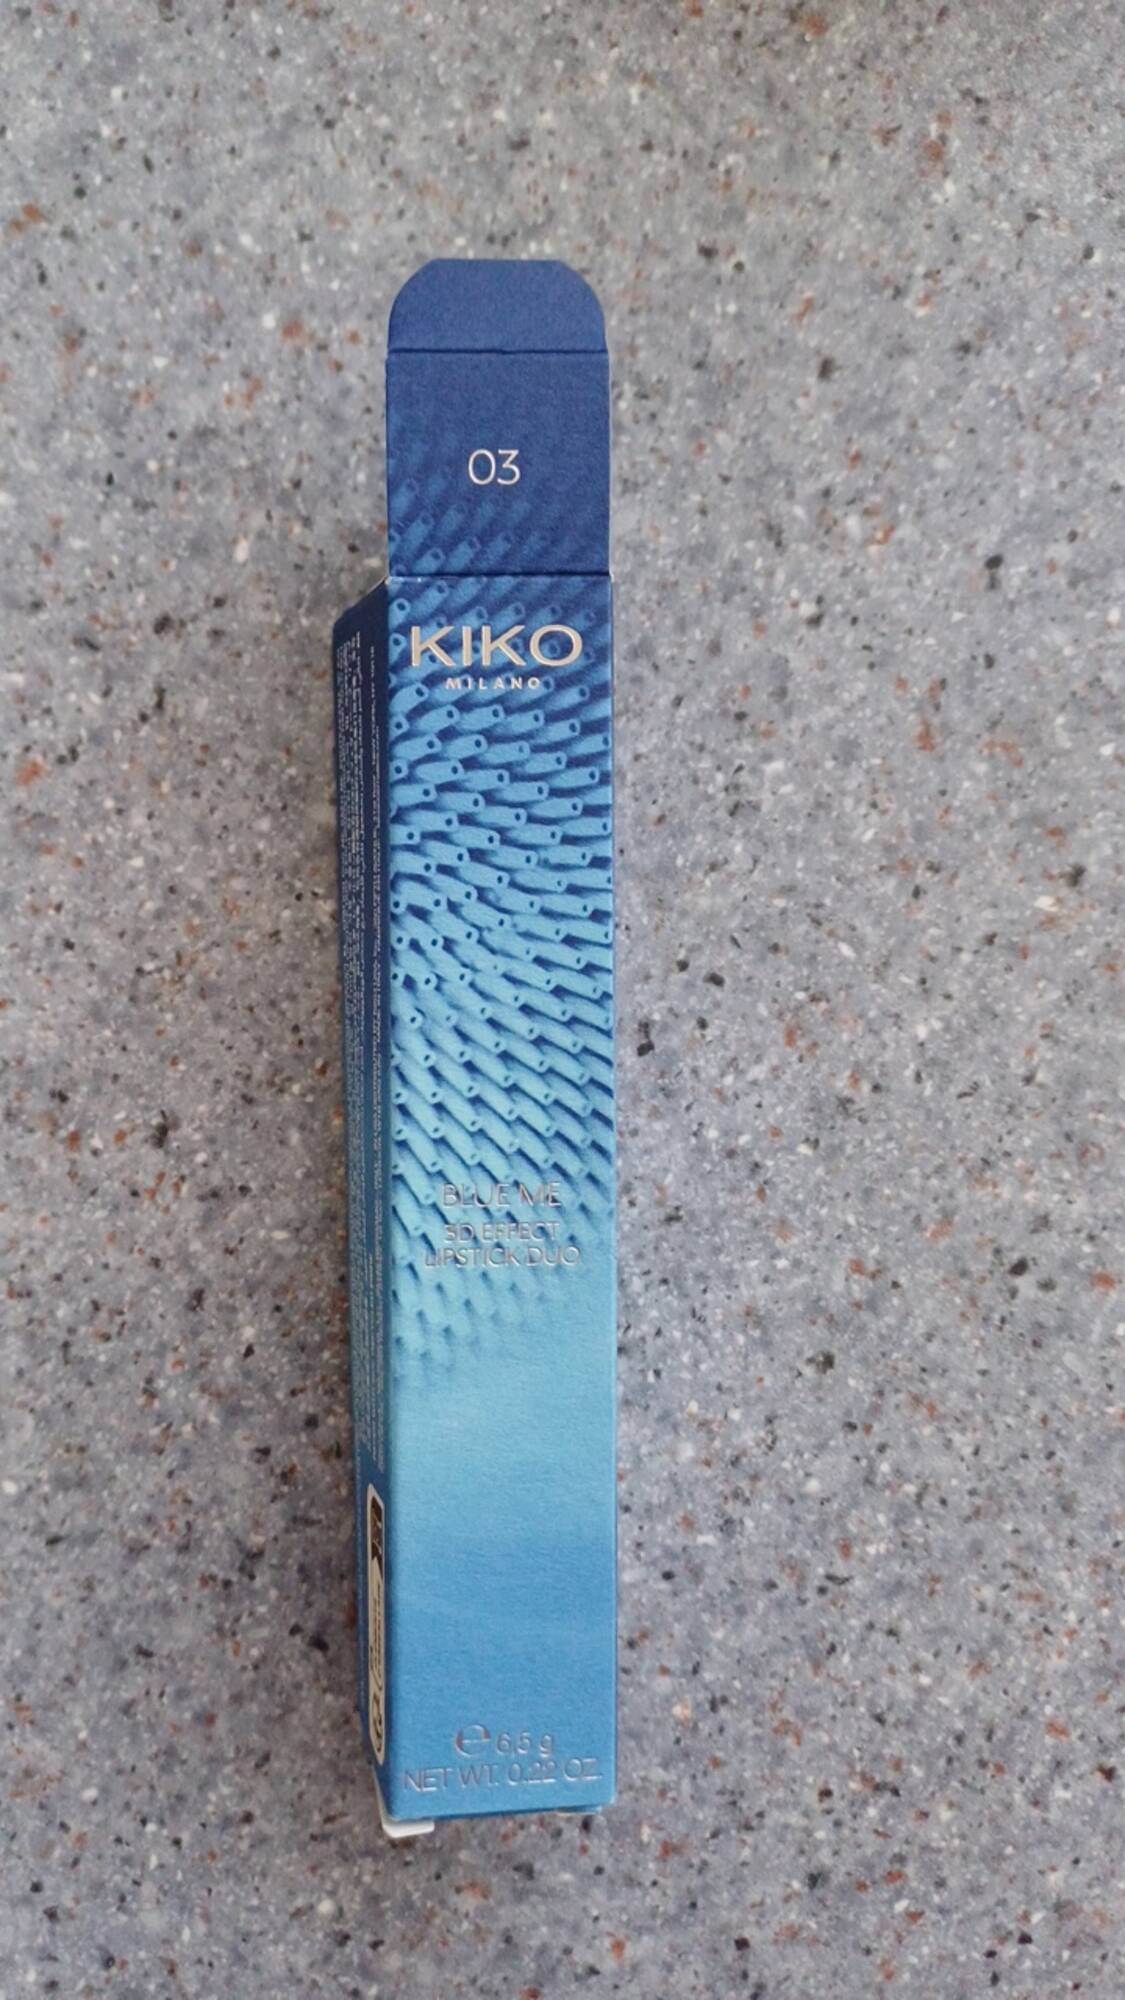 KIKO - Blue me - 3D Effect lipstick duo